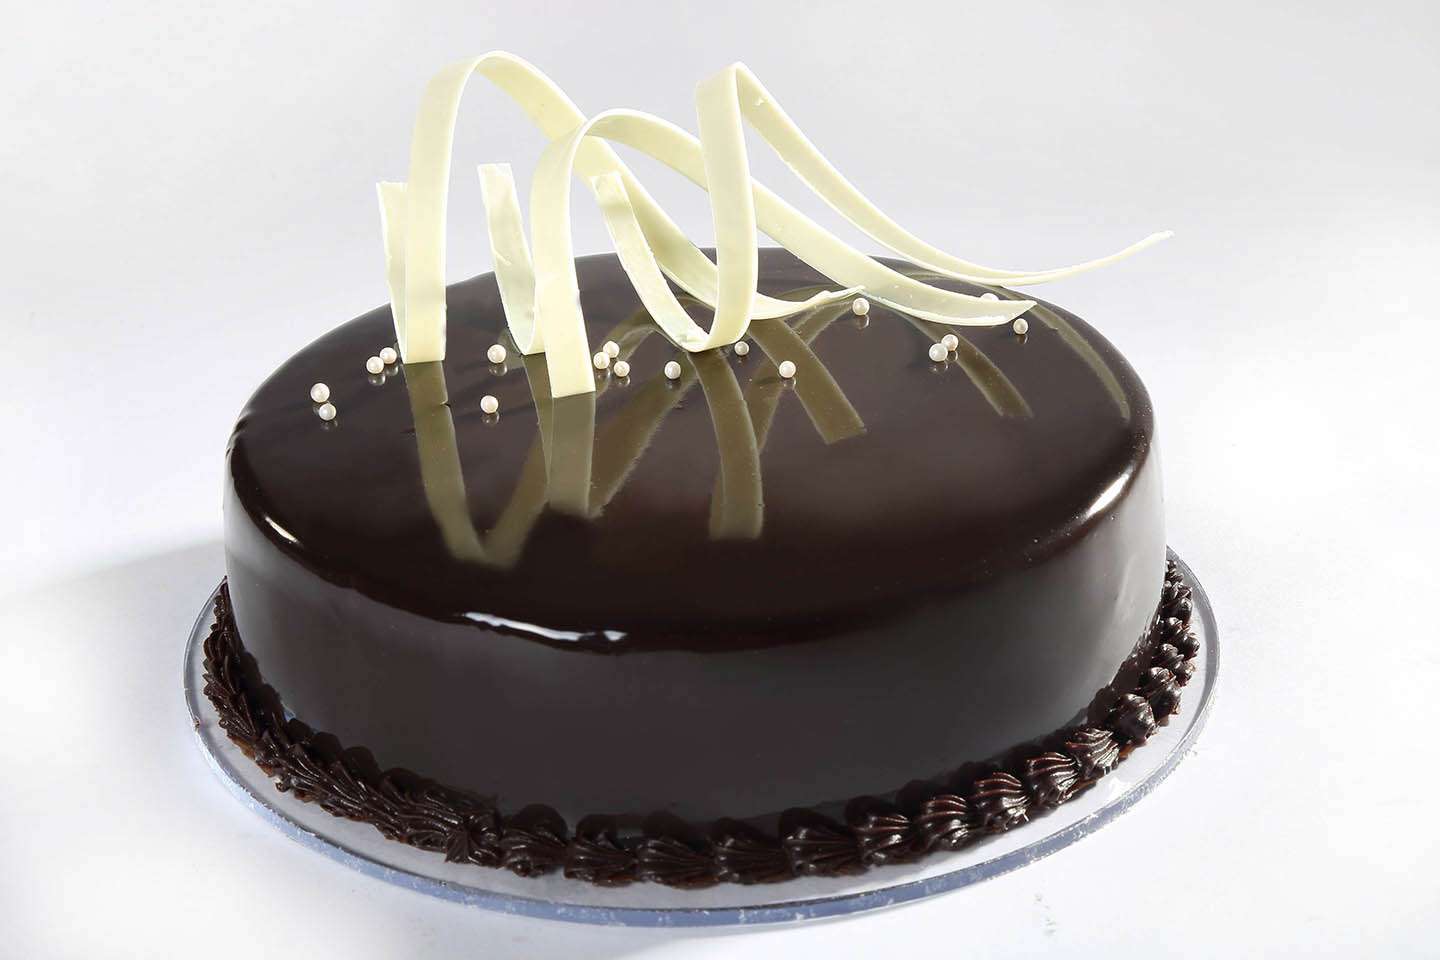 How to make marble fondant cake by Cake Advisor - YouTube